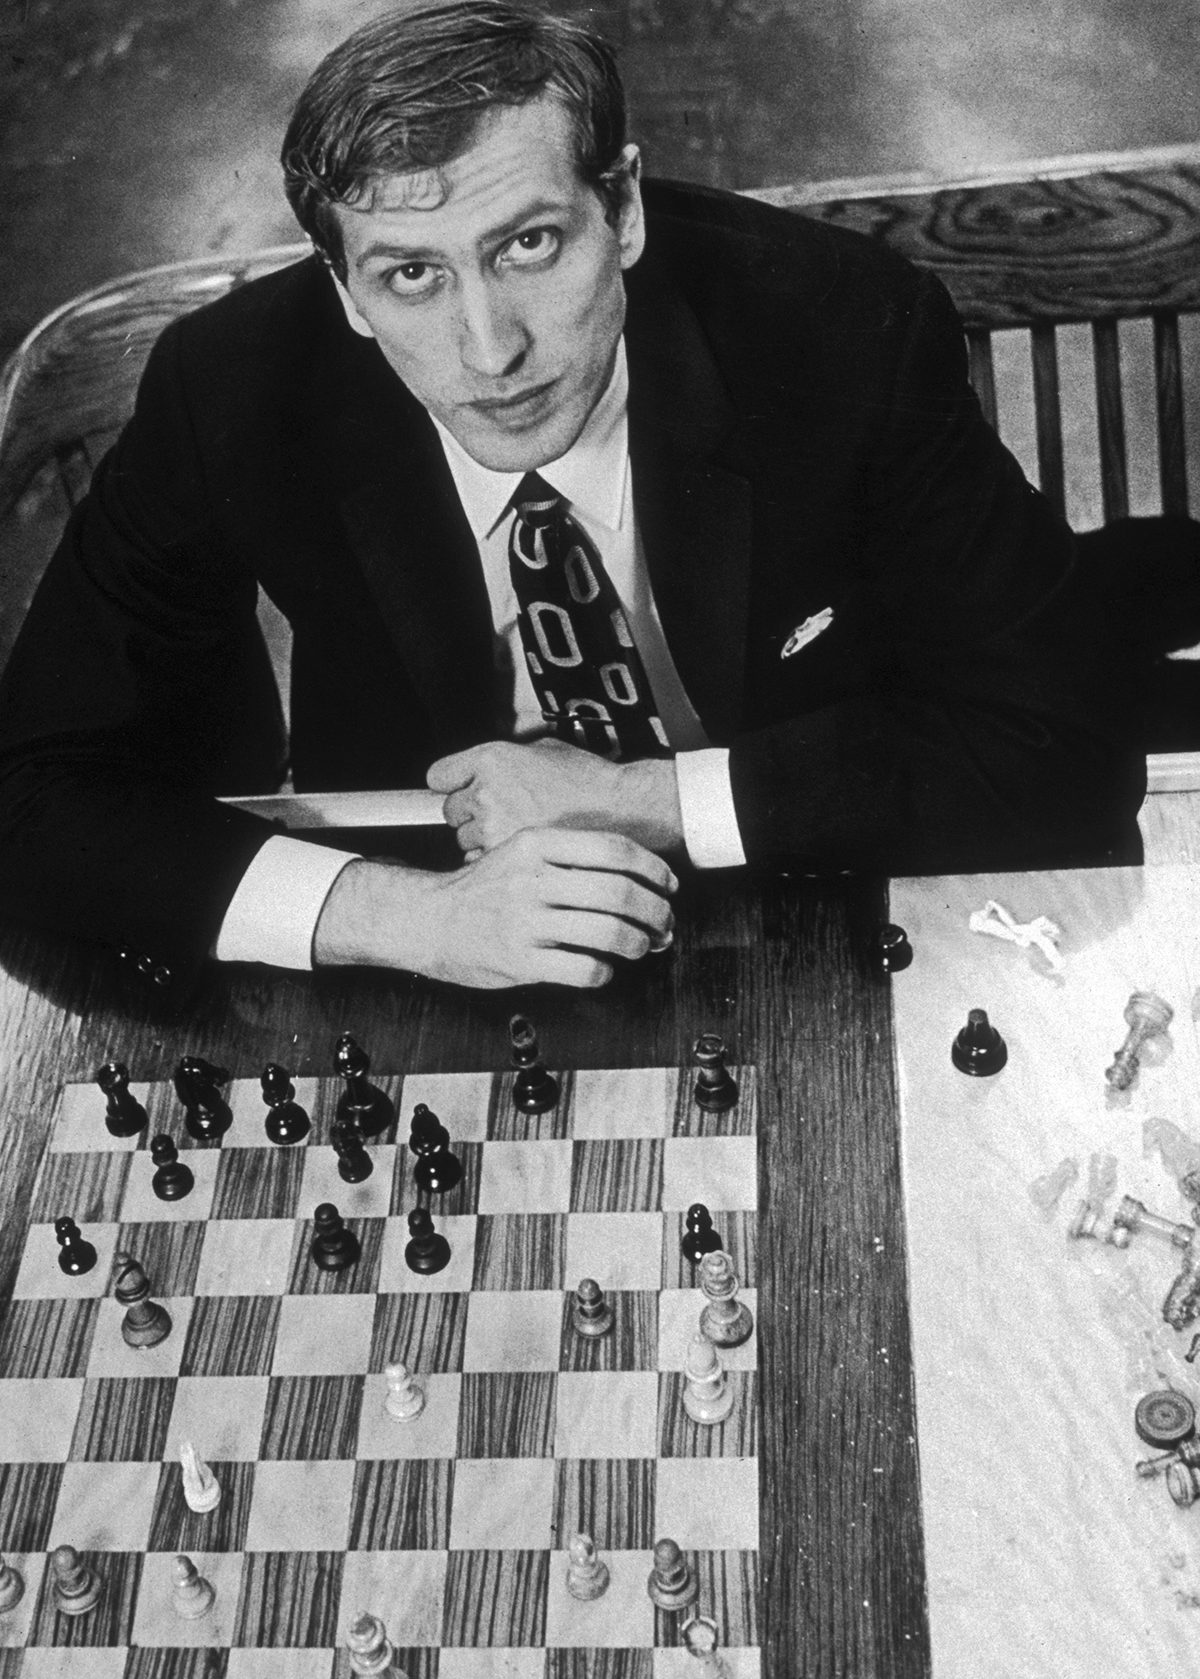 The Match of the Century: Fischer-Spassky, 1972 Fisher - Spassky, 1972  Chess match of the 20th century